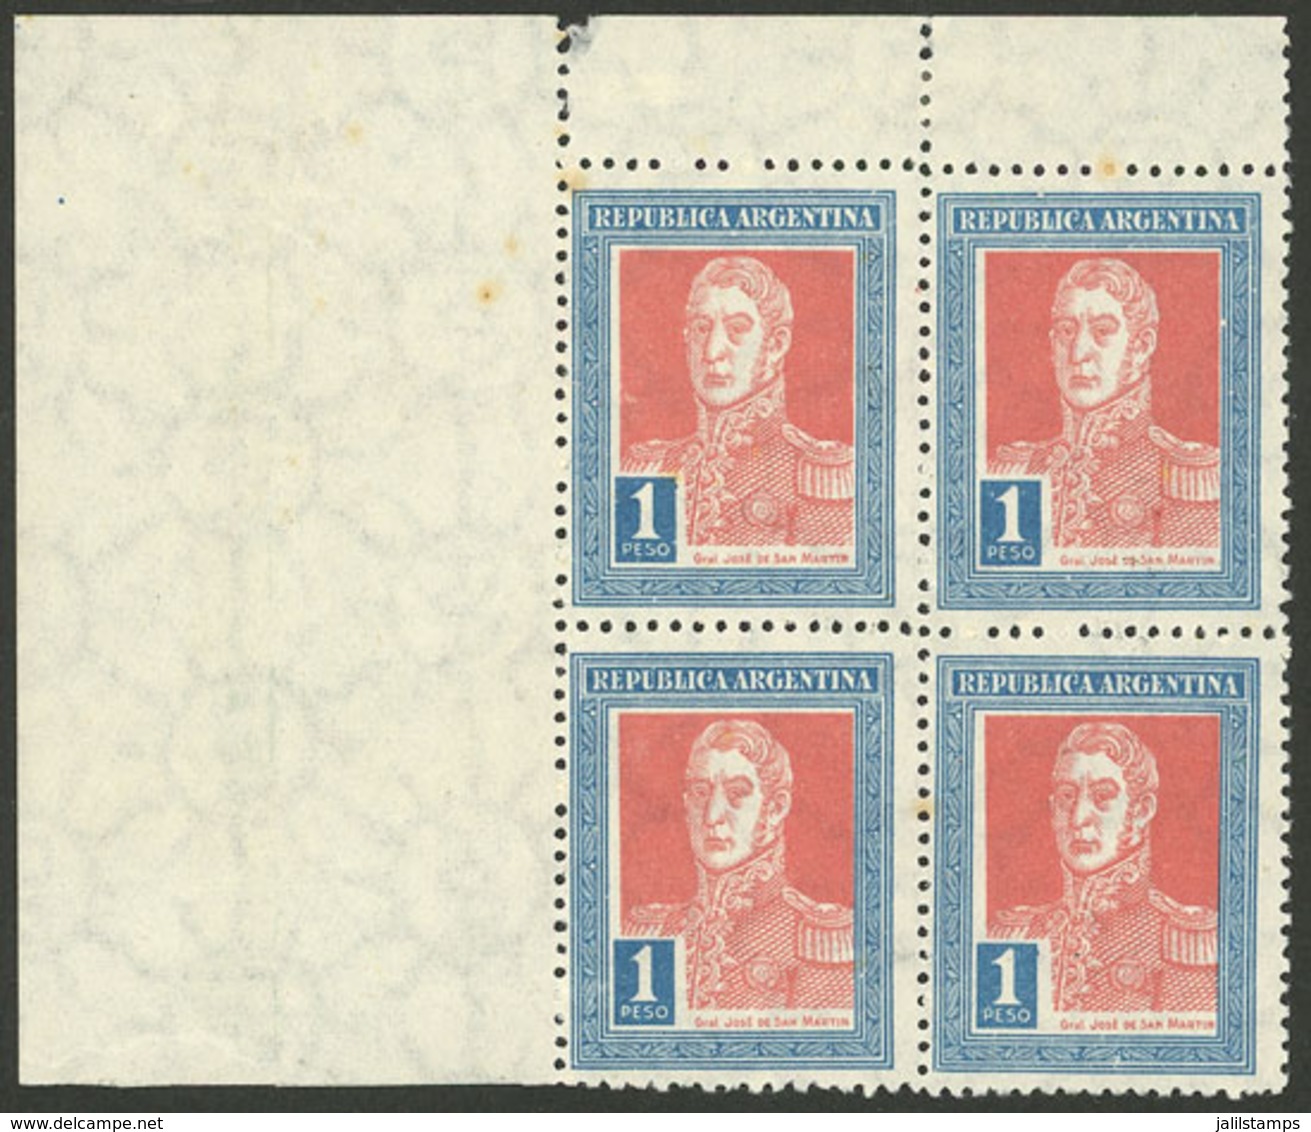 ARGENTINA: GJ.586, 1P. San Martín With Sun Wmk, Corner Block Of 4 Printed On VERY RARE VERY THIN PAPER (80 Microns), Spe - Unused Stamps